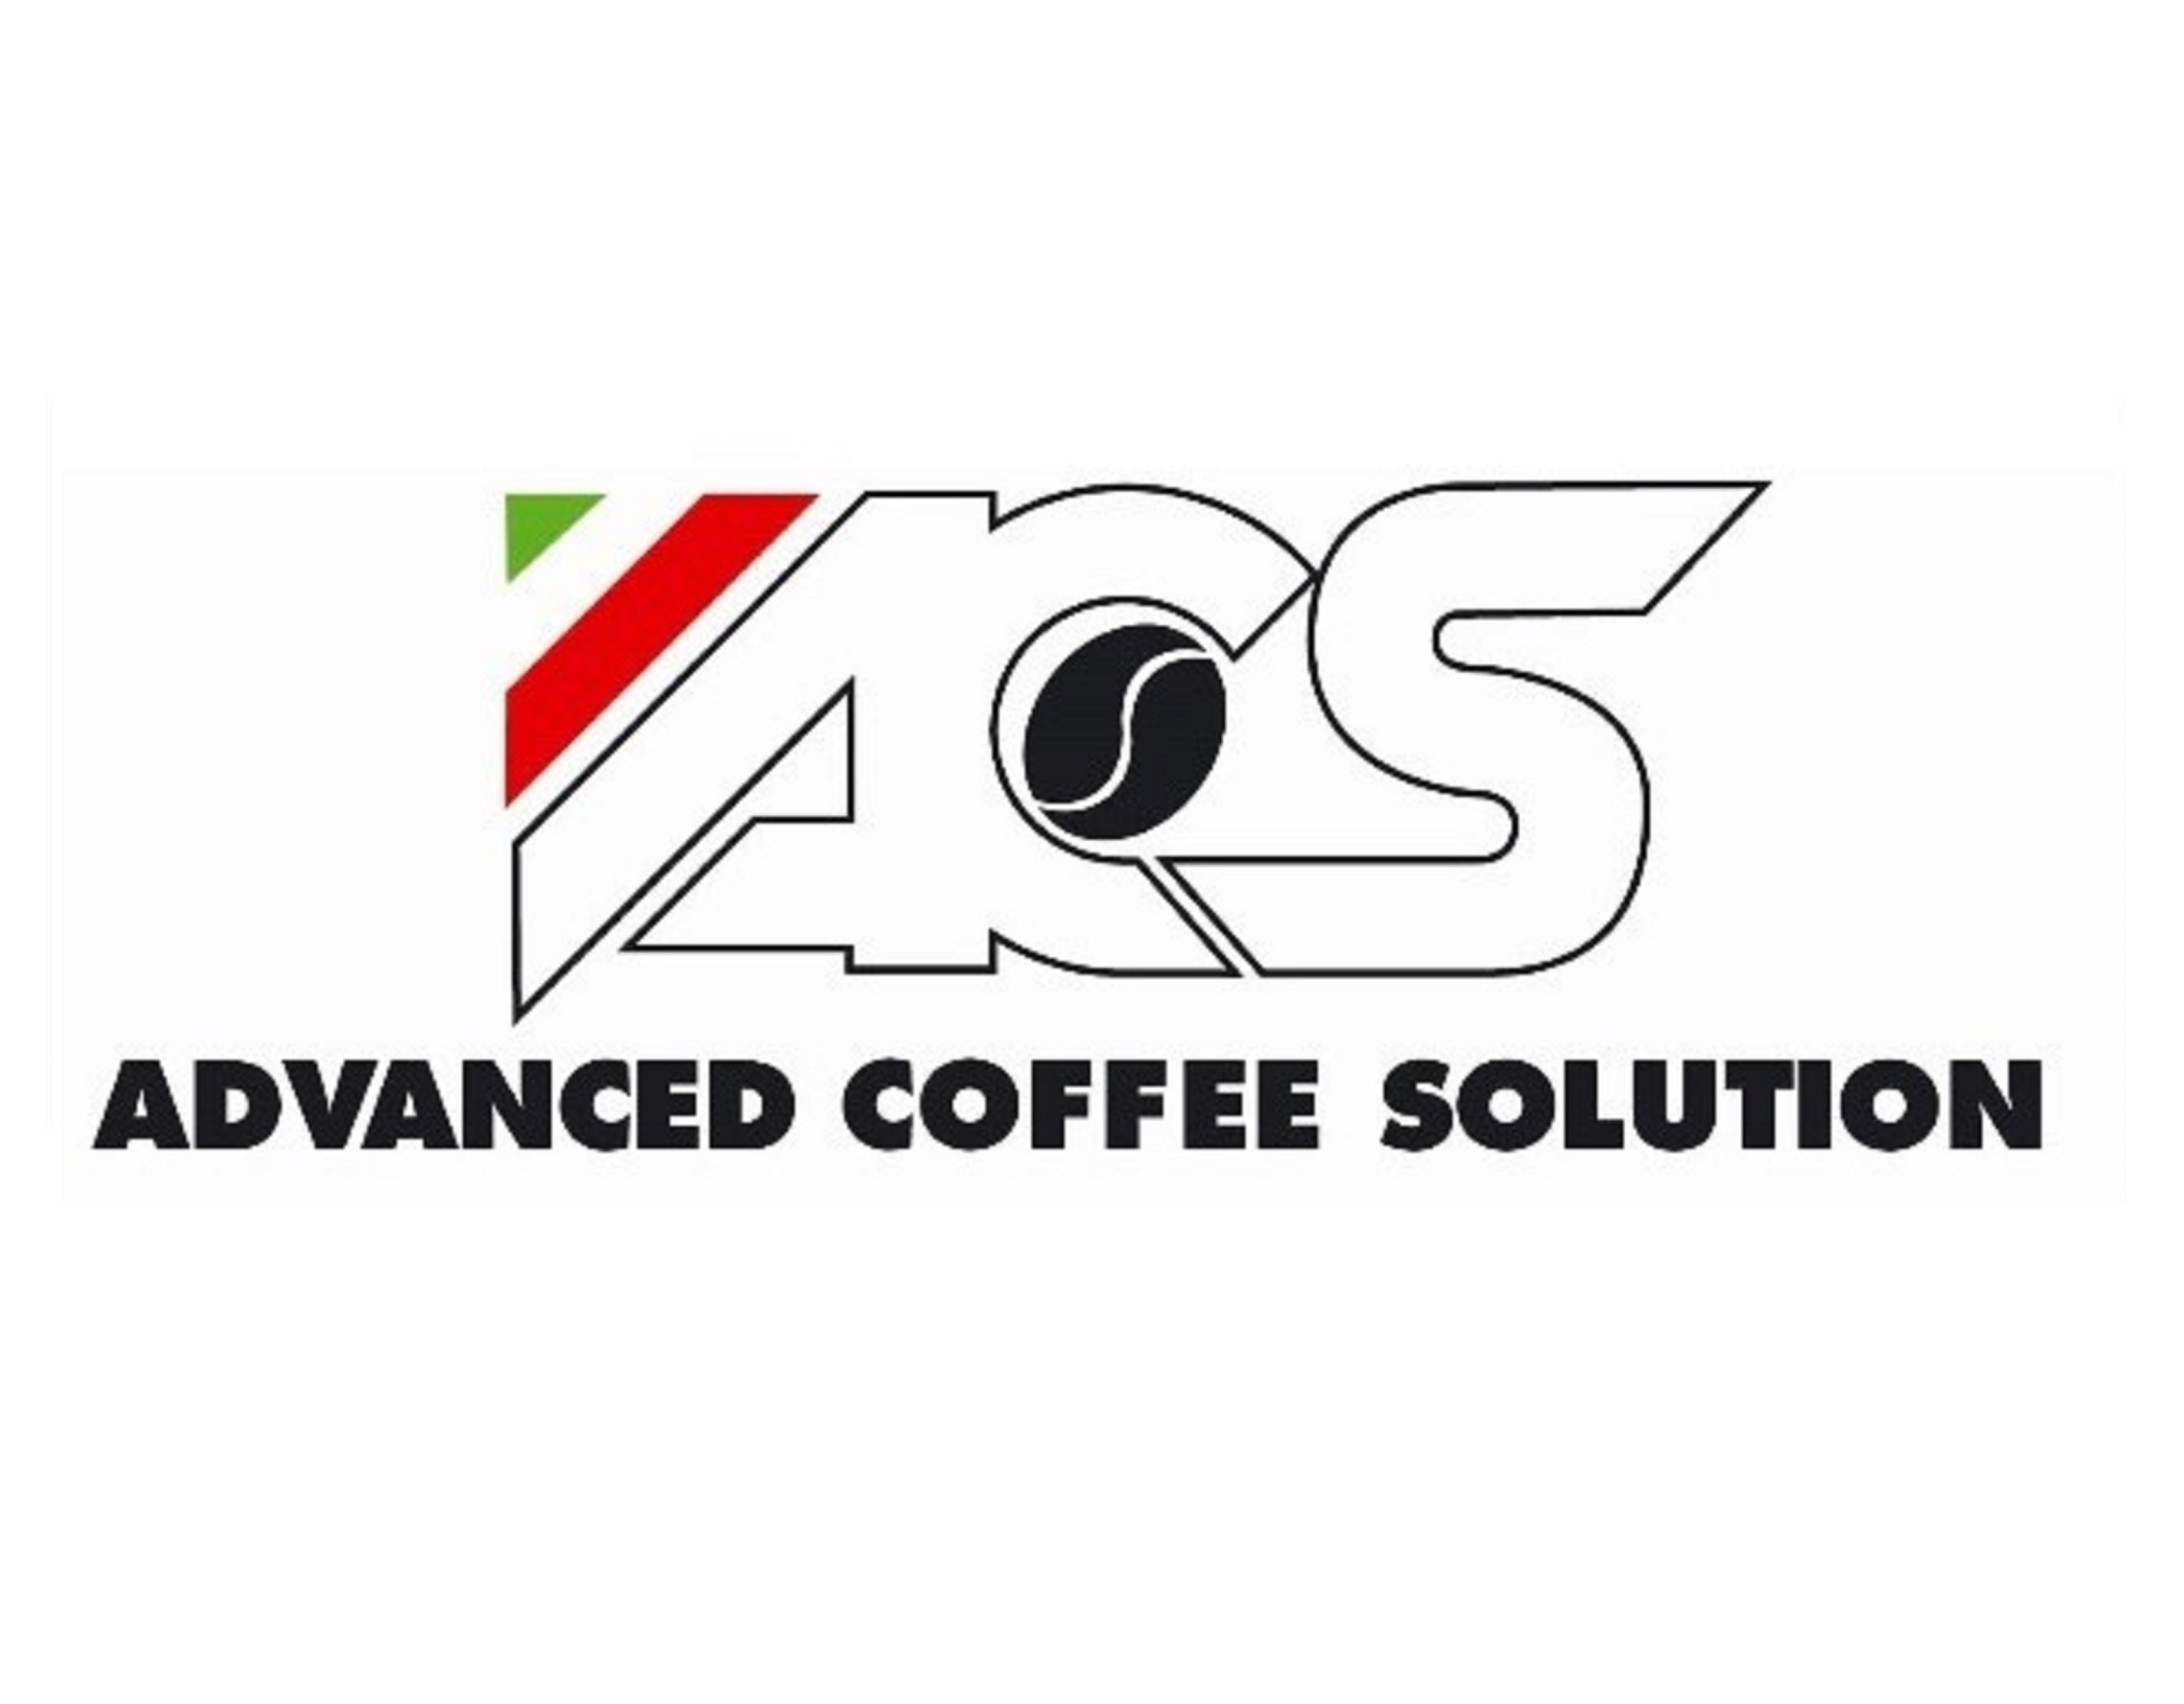 ADVANCE COFFEE SOLUTION